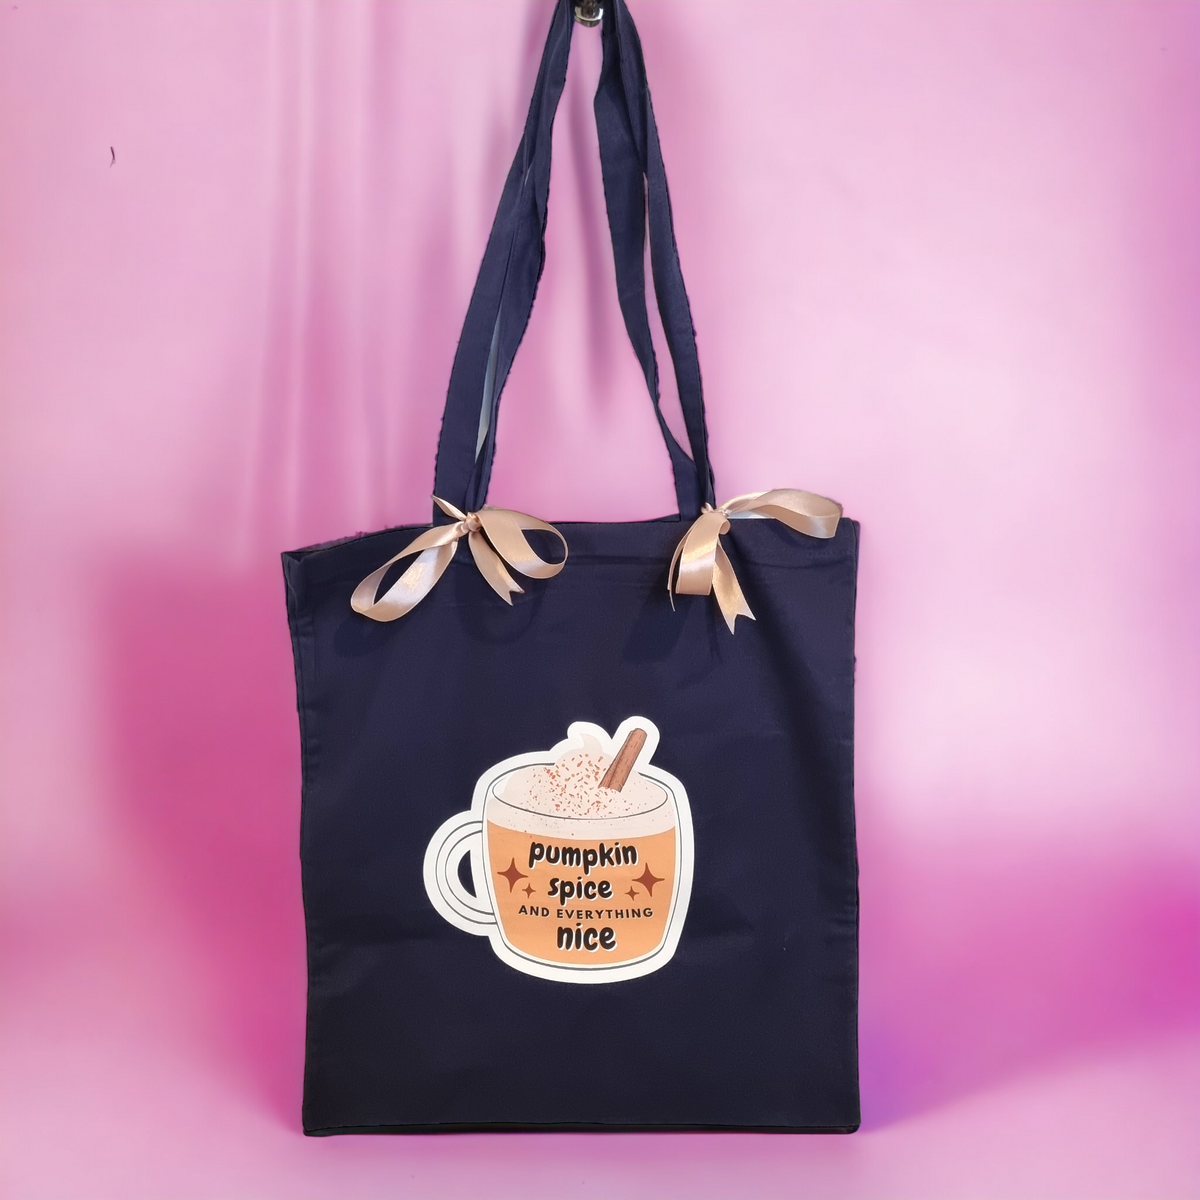 Pumpkin Spice Latte Navy Tote Bag